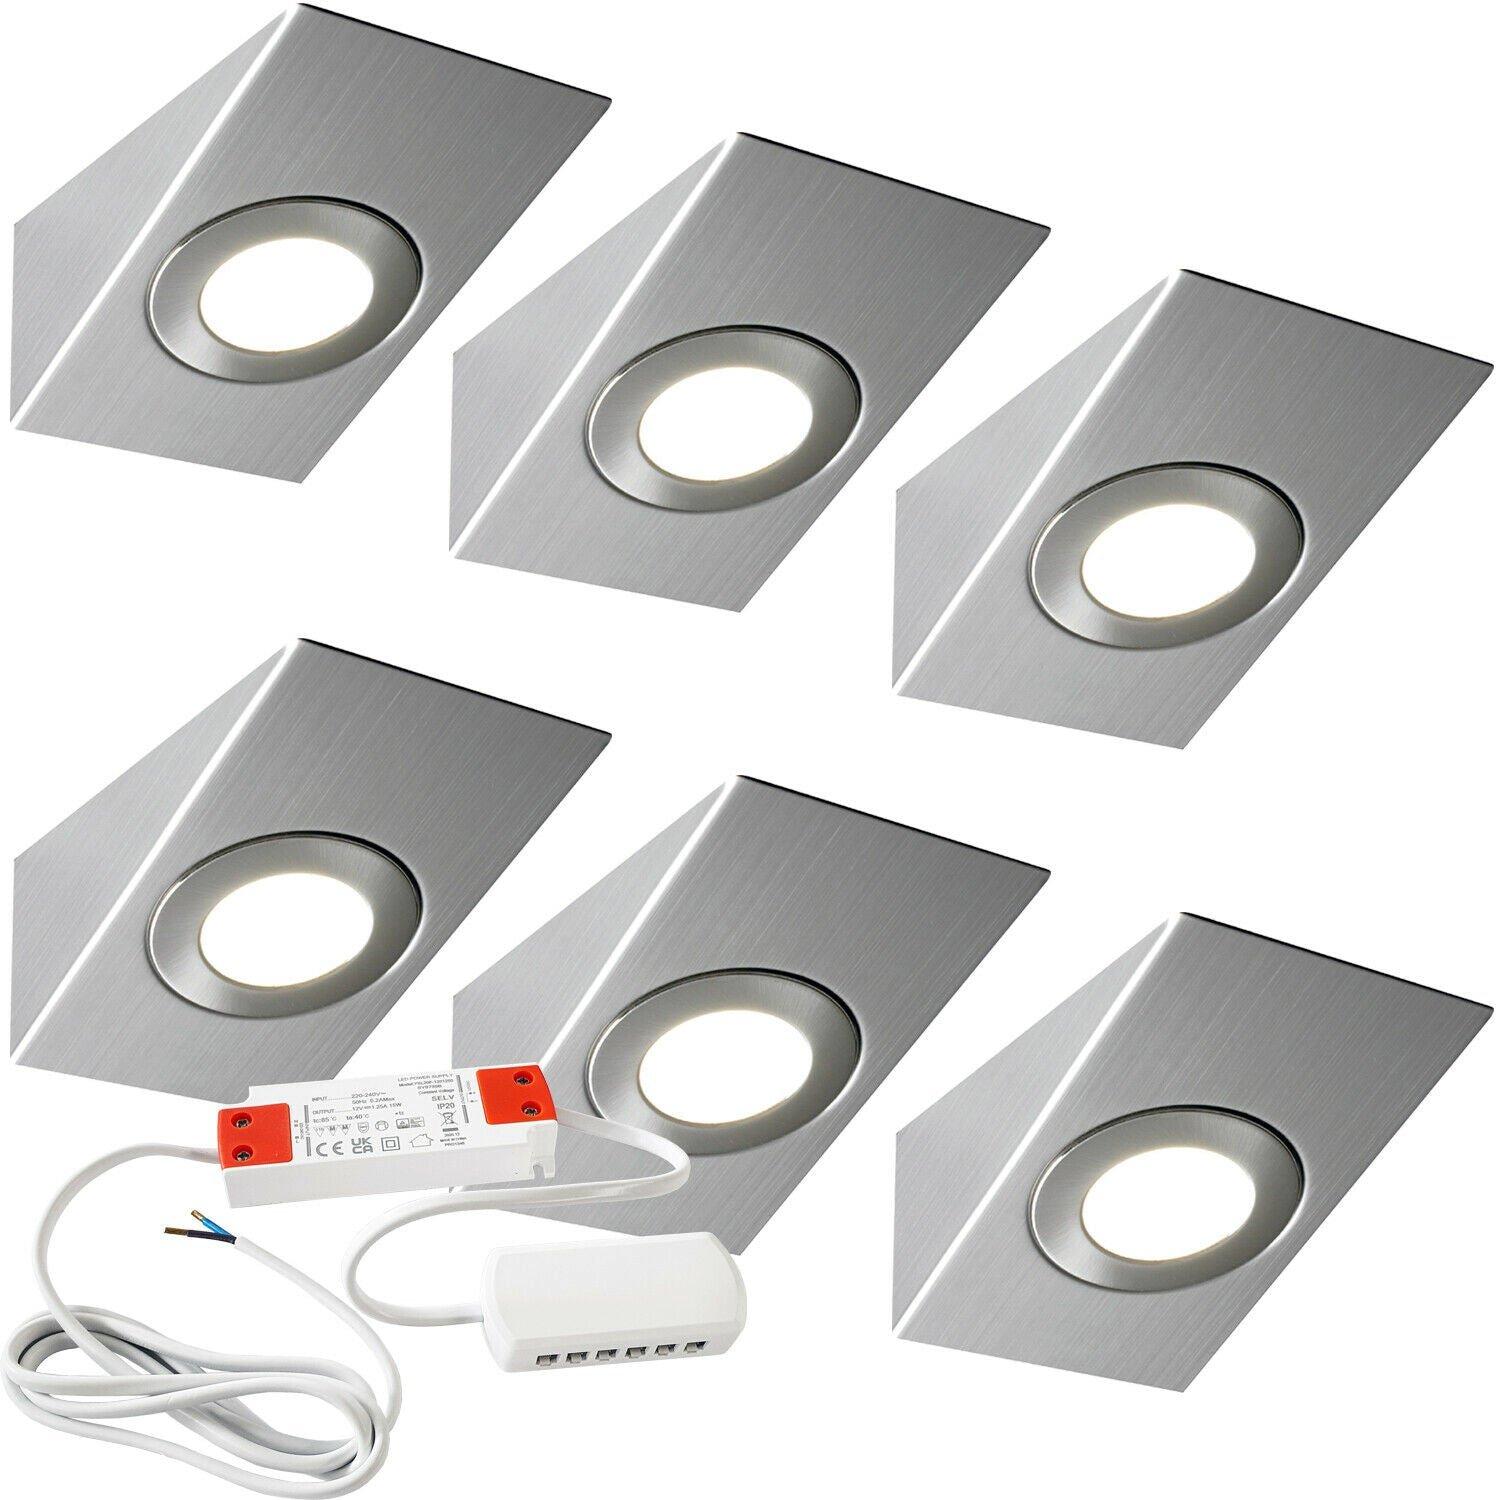 6x BRUSHED NICKEL Wedge Surface Under Cabinet Kitchen Light & Driver Kit - Warm White LED